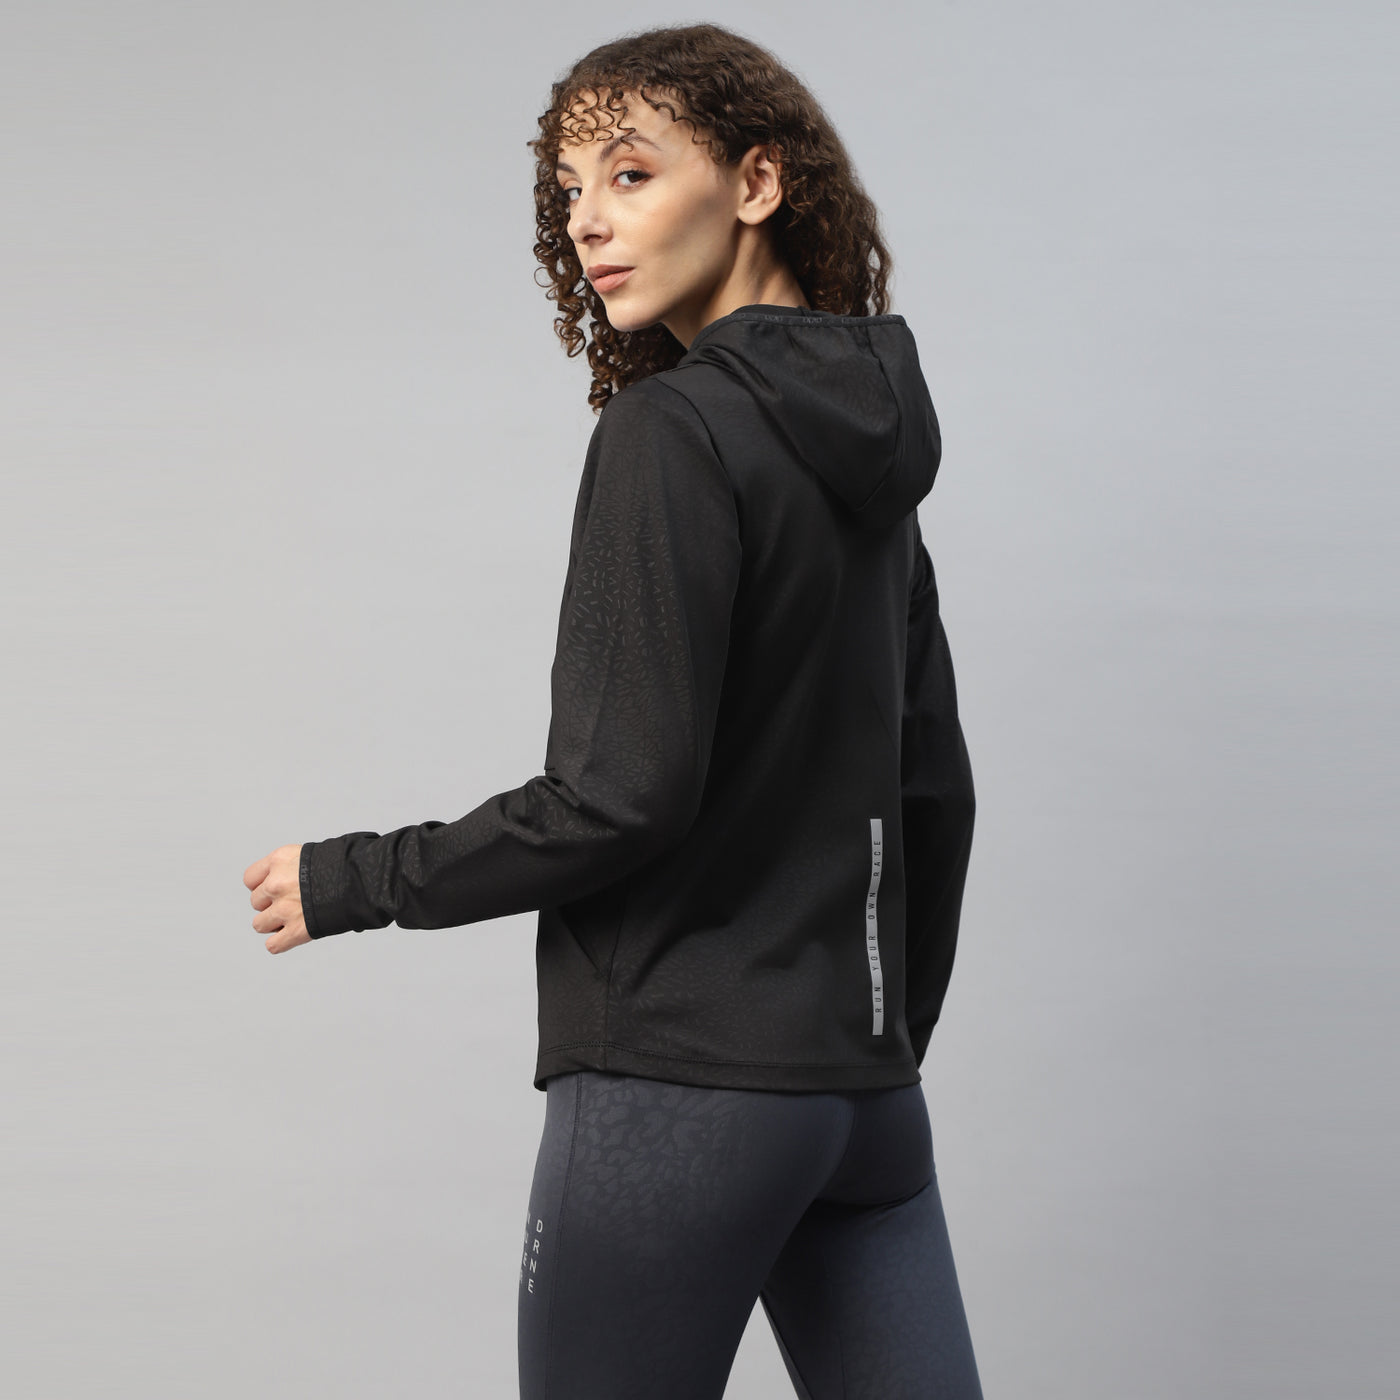 Slim Fit Training jacket - Women